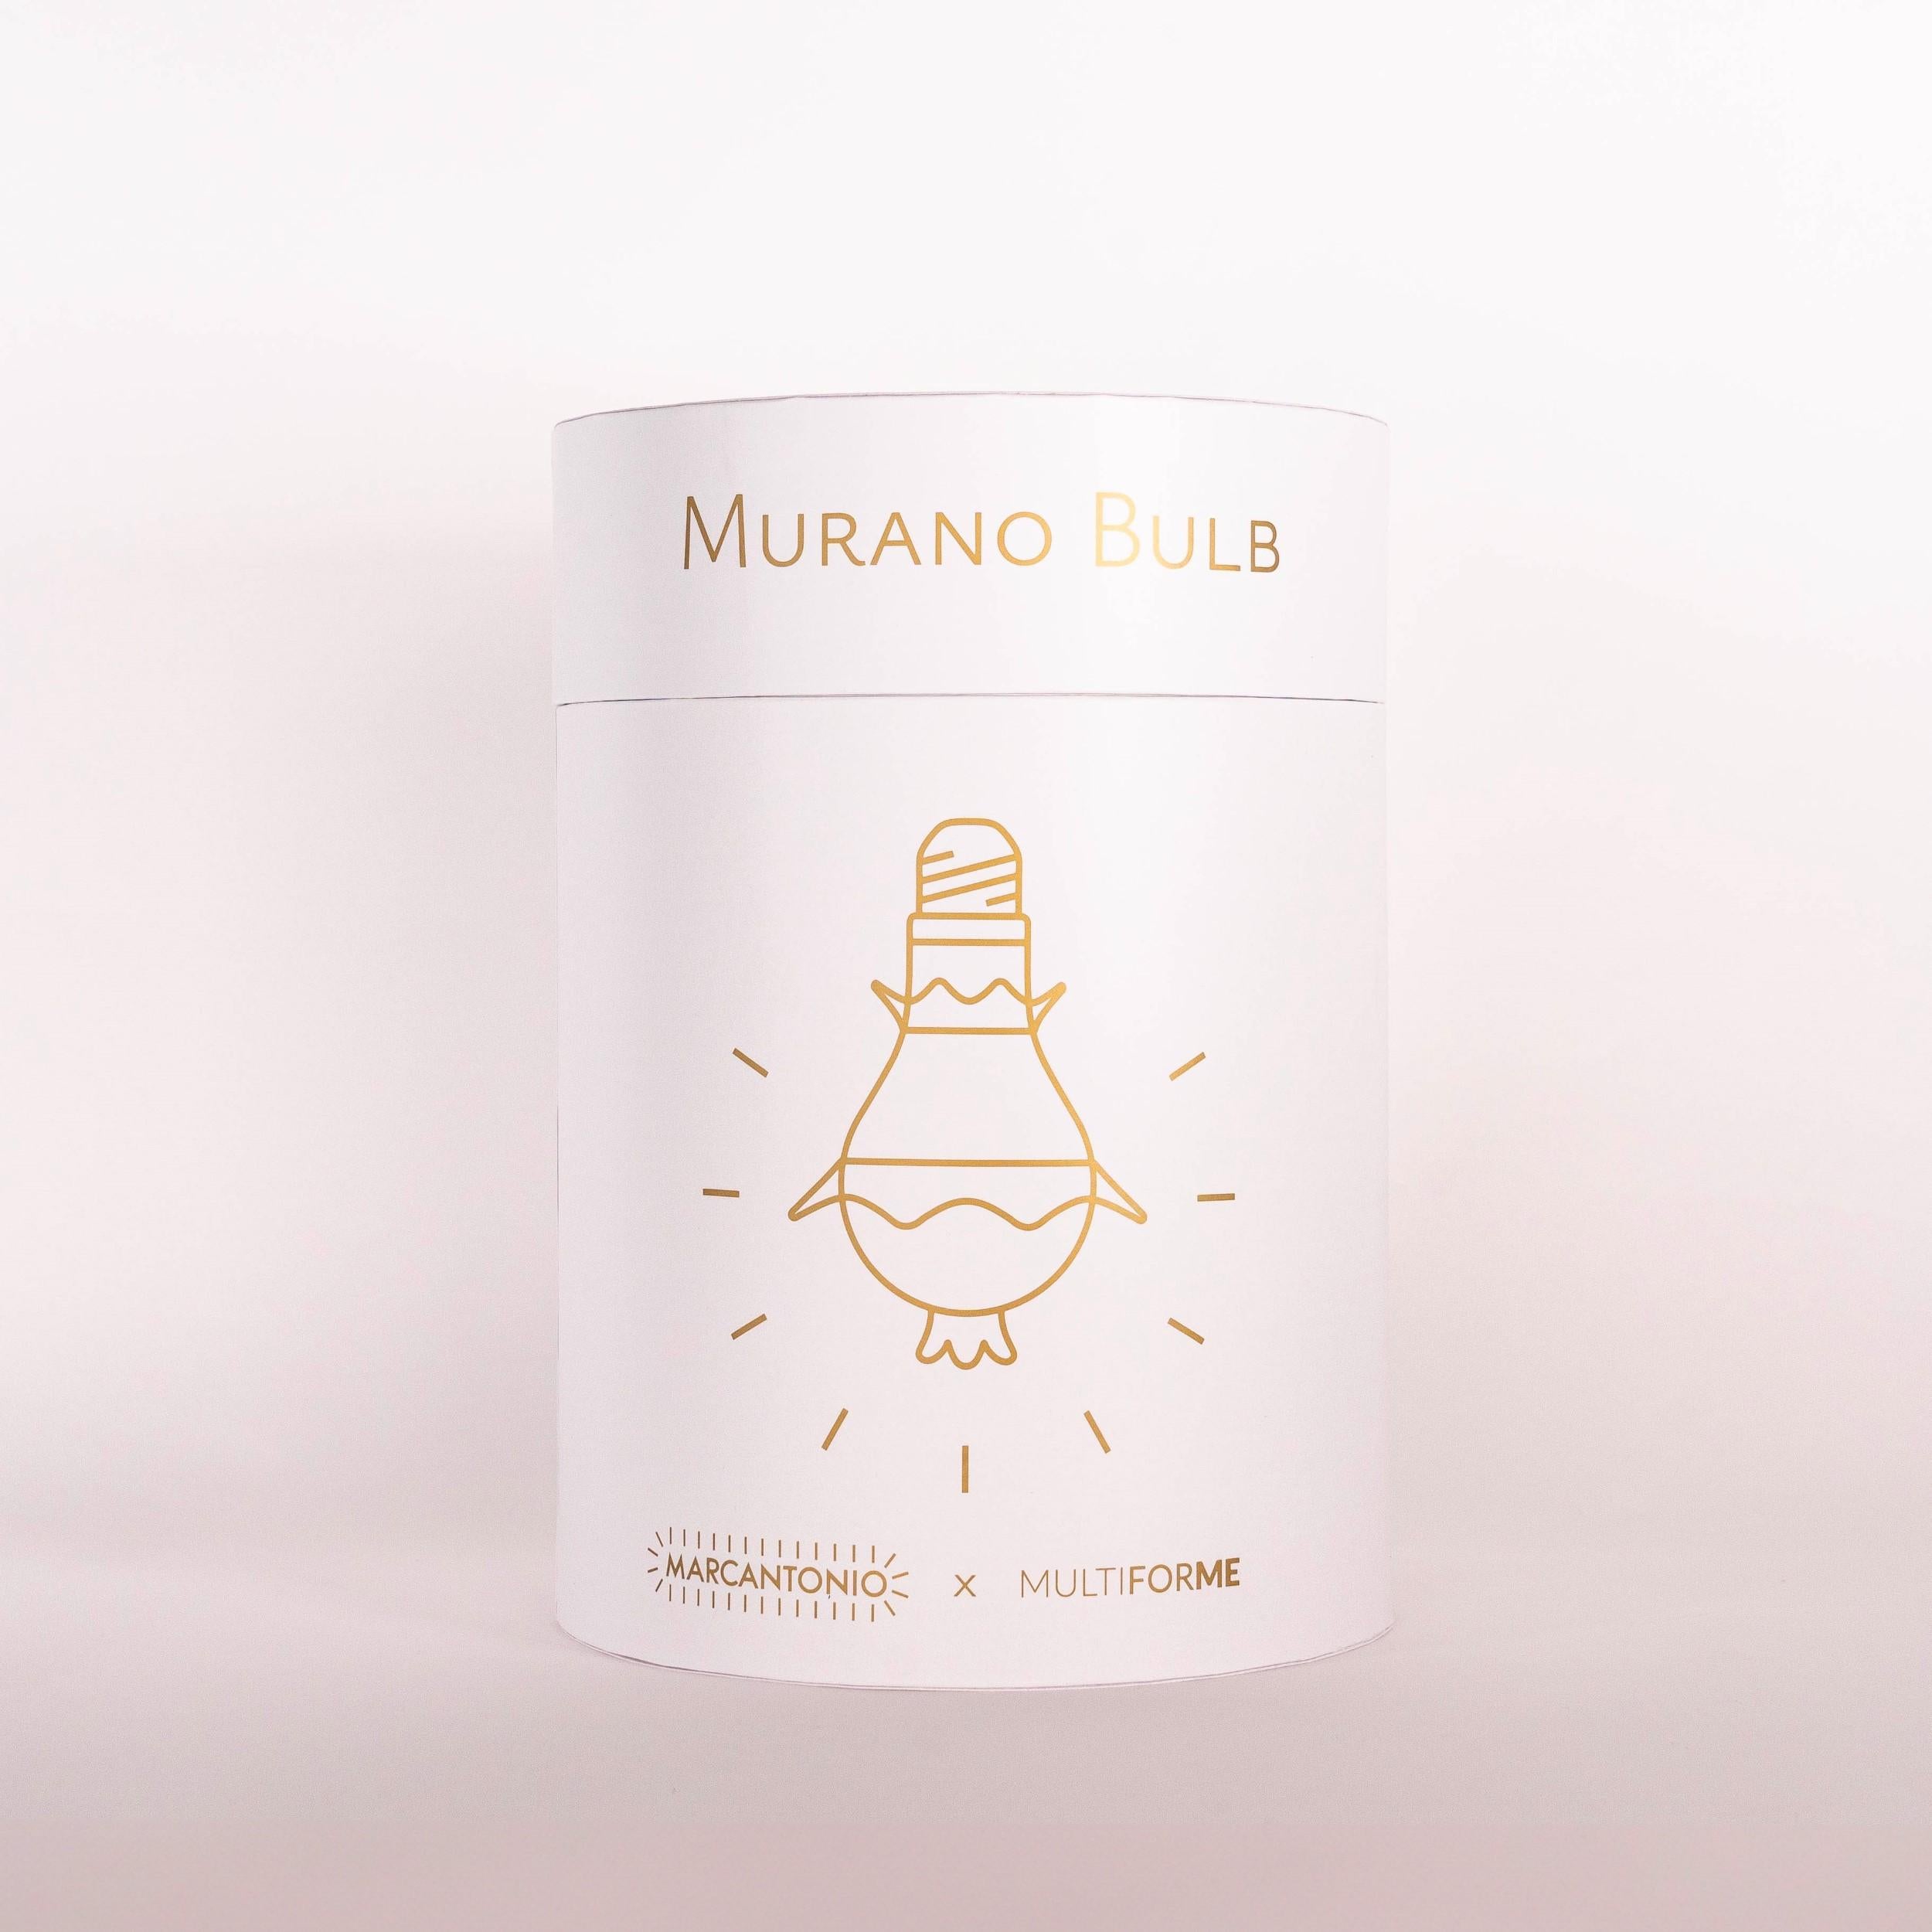 Artistic glass lightbulb chandelier Murano Bulb Marcantonio X Multiforme #01 For Sale 2